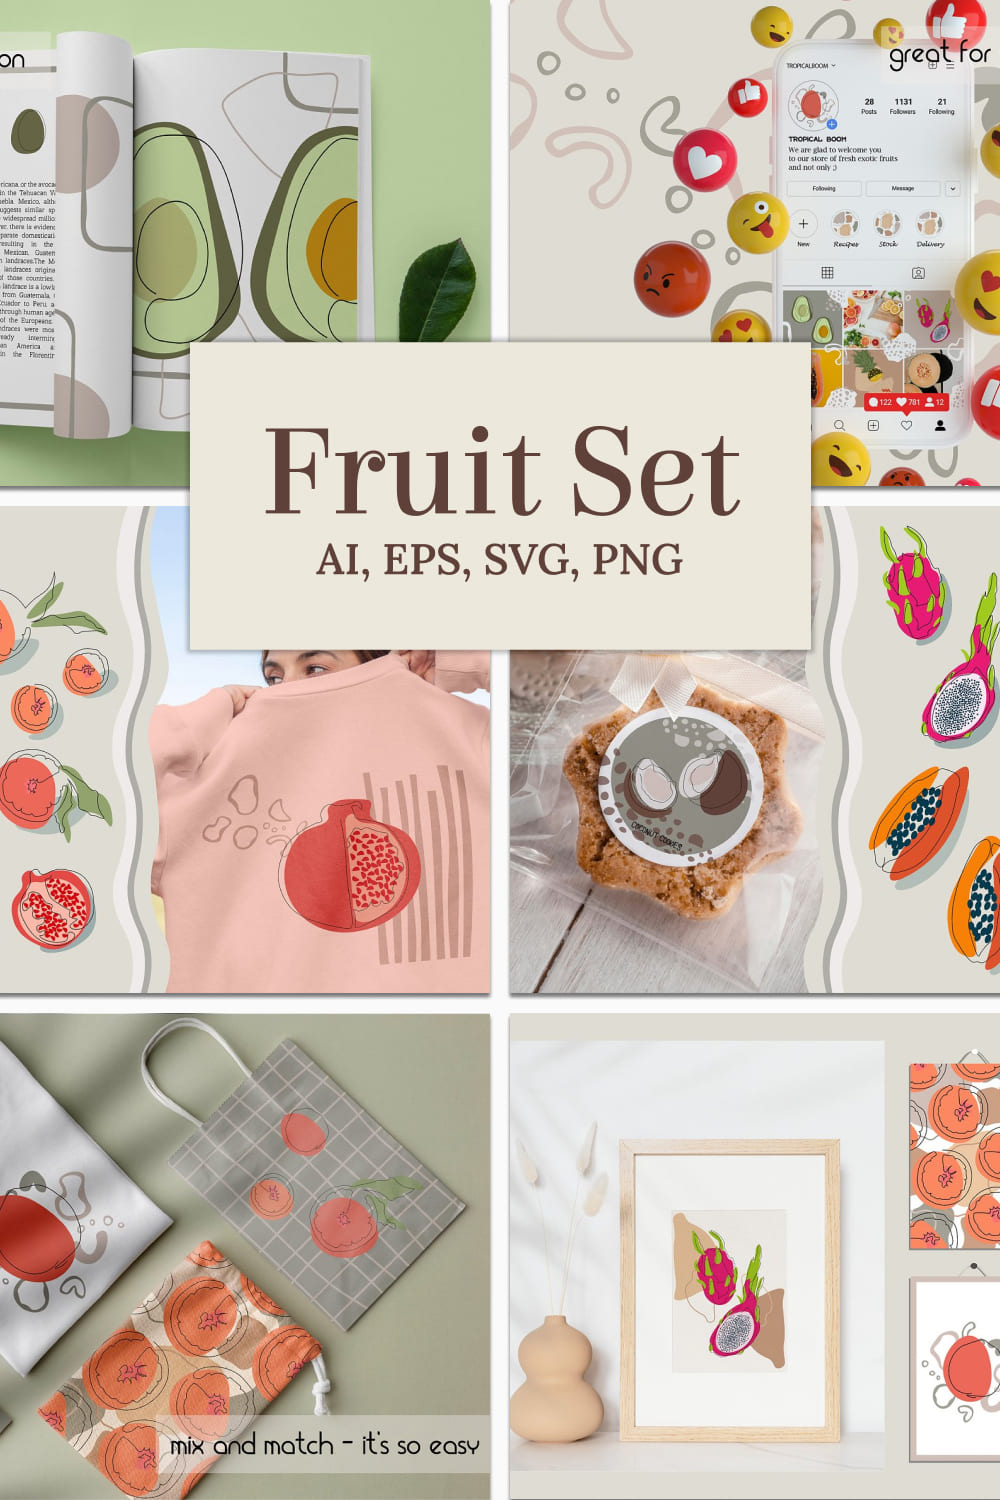 Fruit set - pinterest image preview.